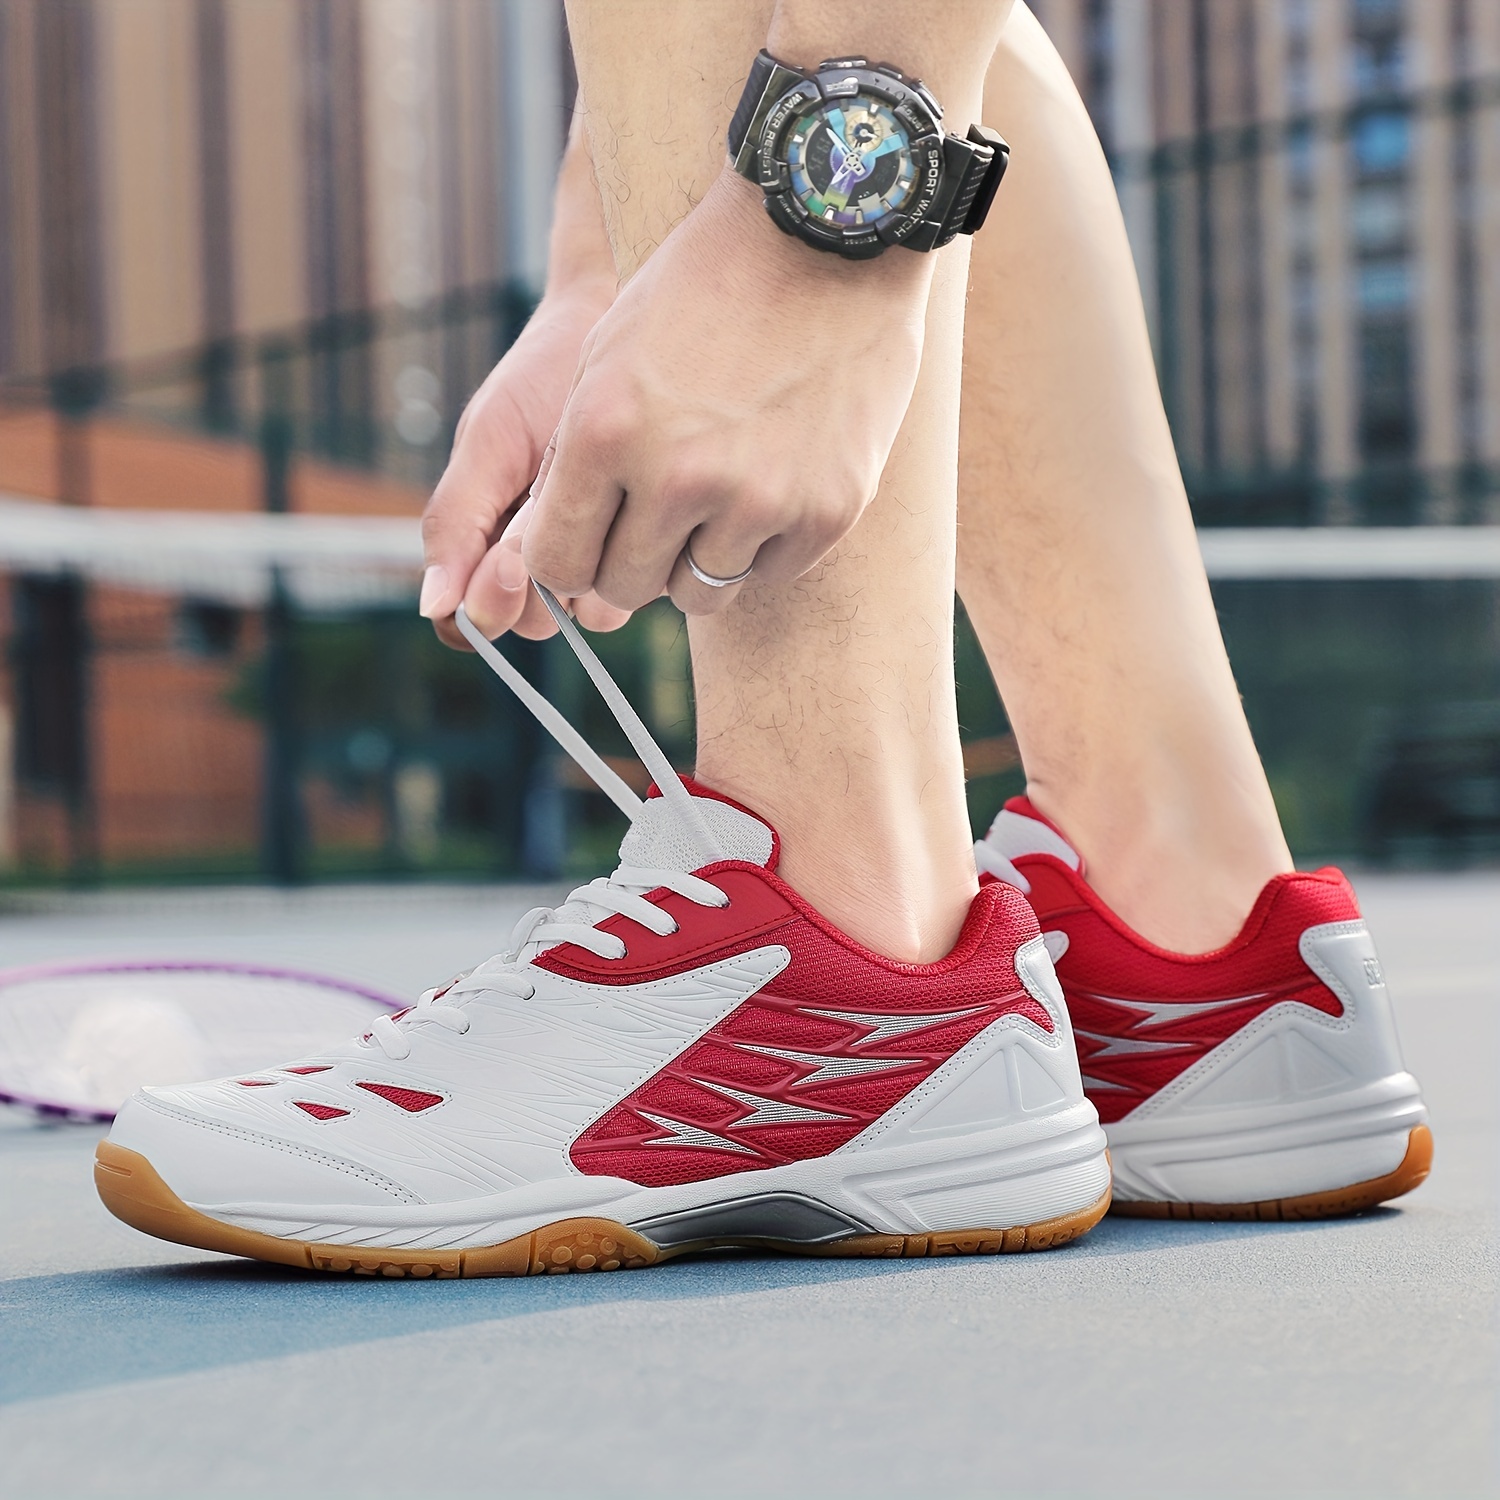 Badminton Shoes Men's Shock-Absorbing Wear-Resistant Non-Slip Breathable  Training Sports Tennis Shoes